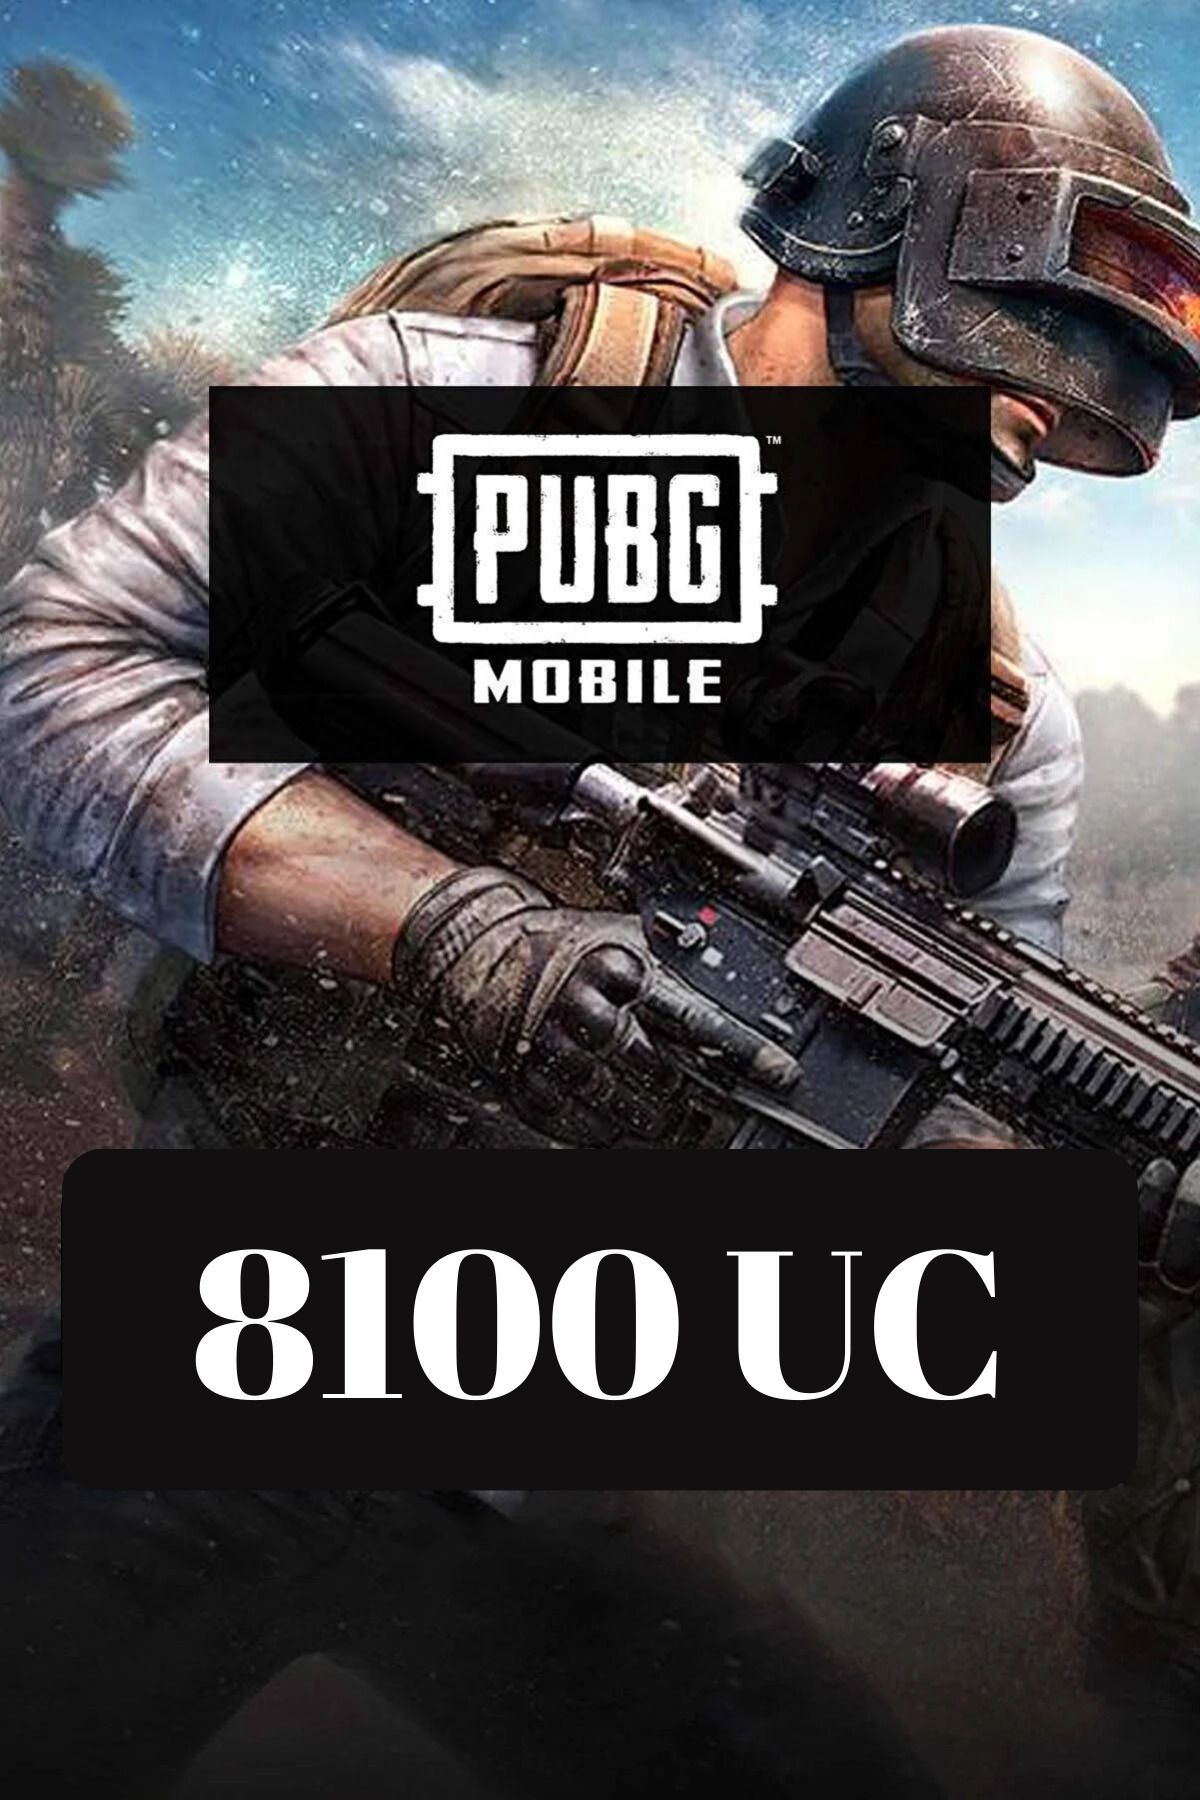 PUBG Mobile 8100 UC Pubg Mobile TR